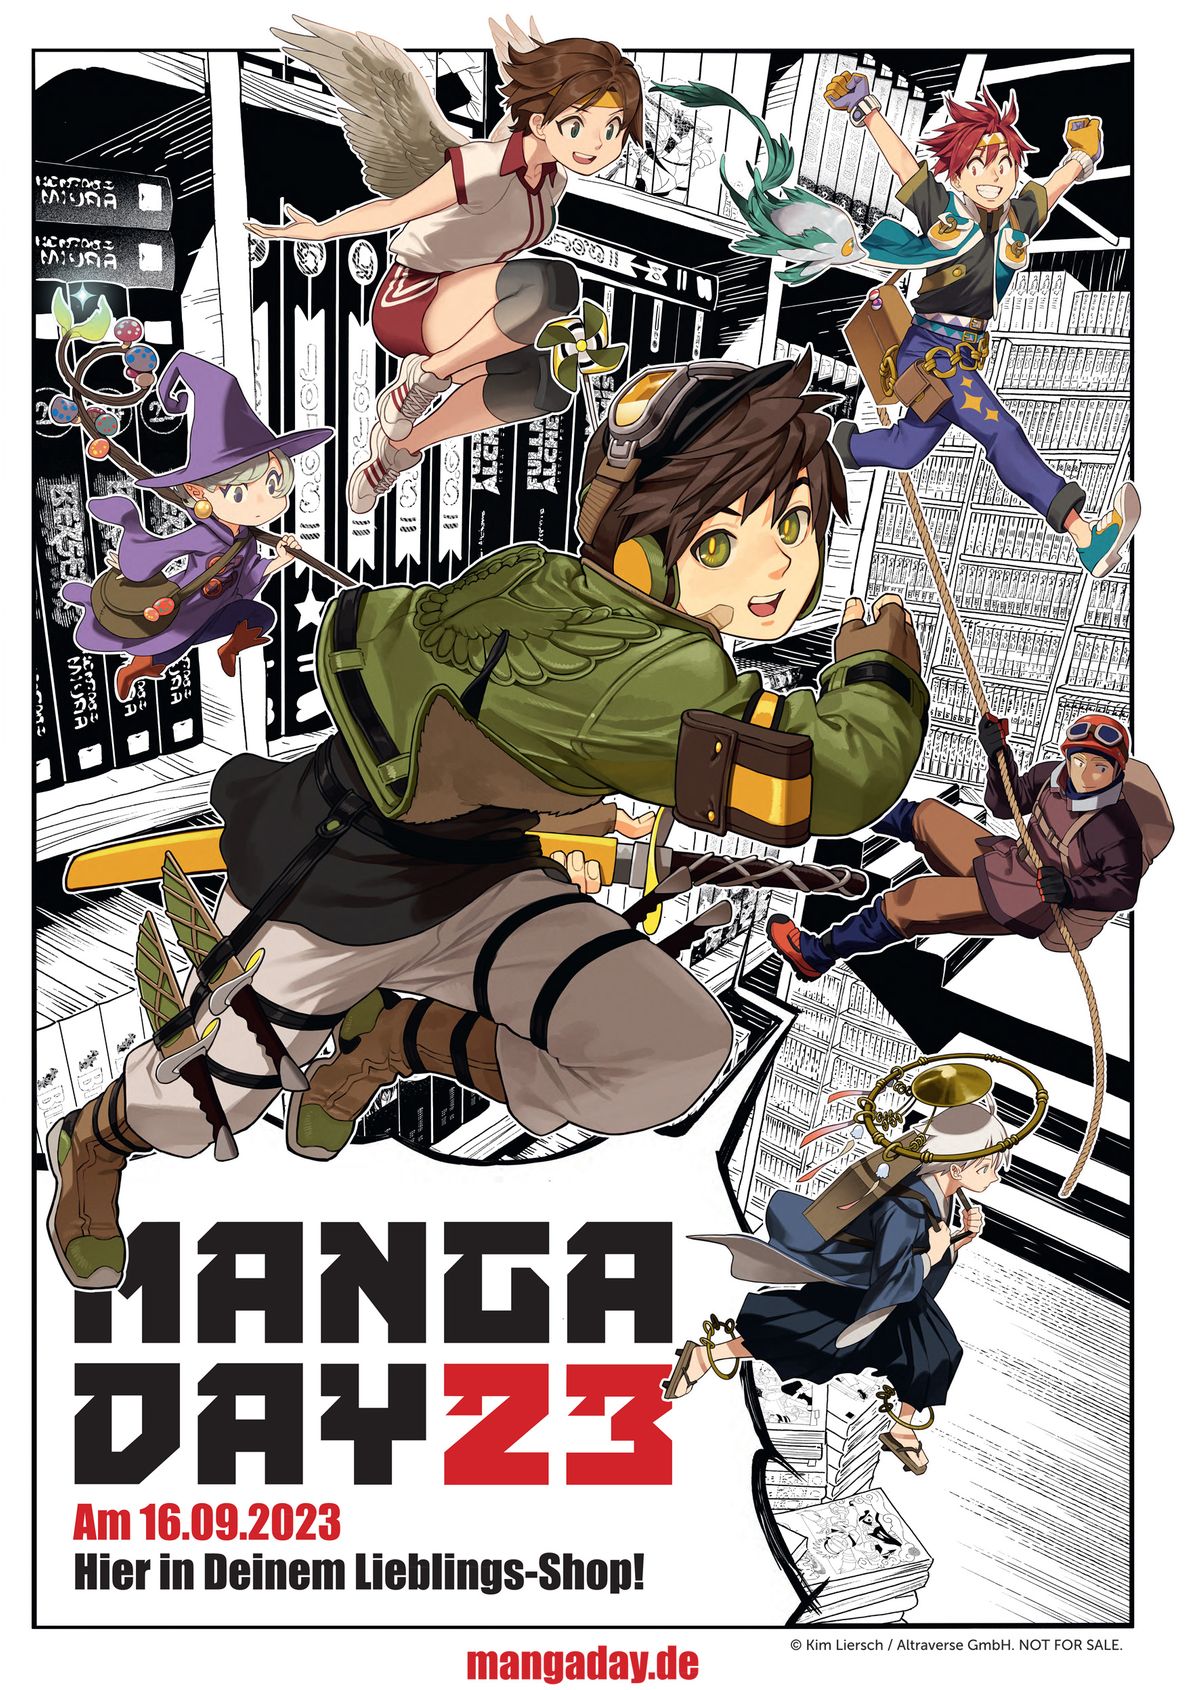 Foto: Der 2. Manga Day findet im September 2023 statt.